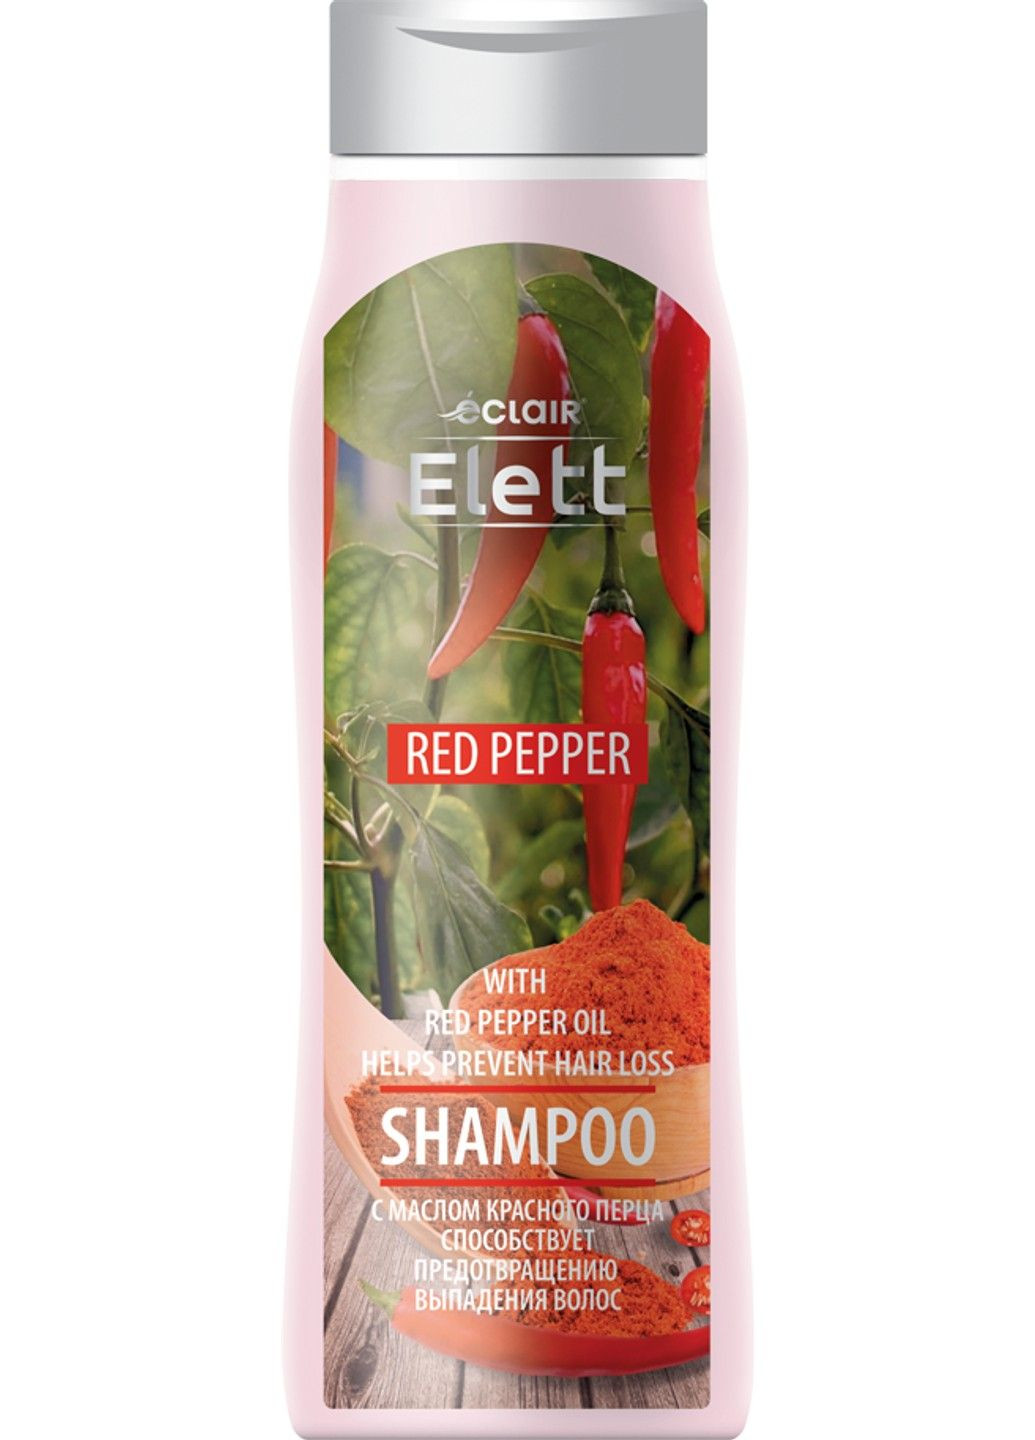 Шампунь Elett Red Pepper против выпадения 400мл Eclair (294092598)